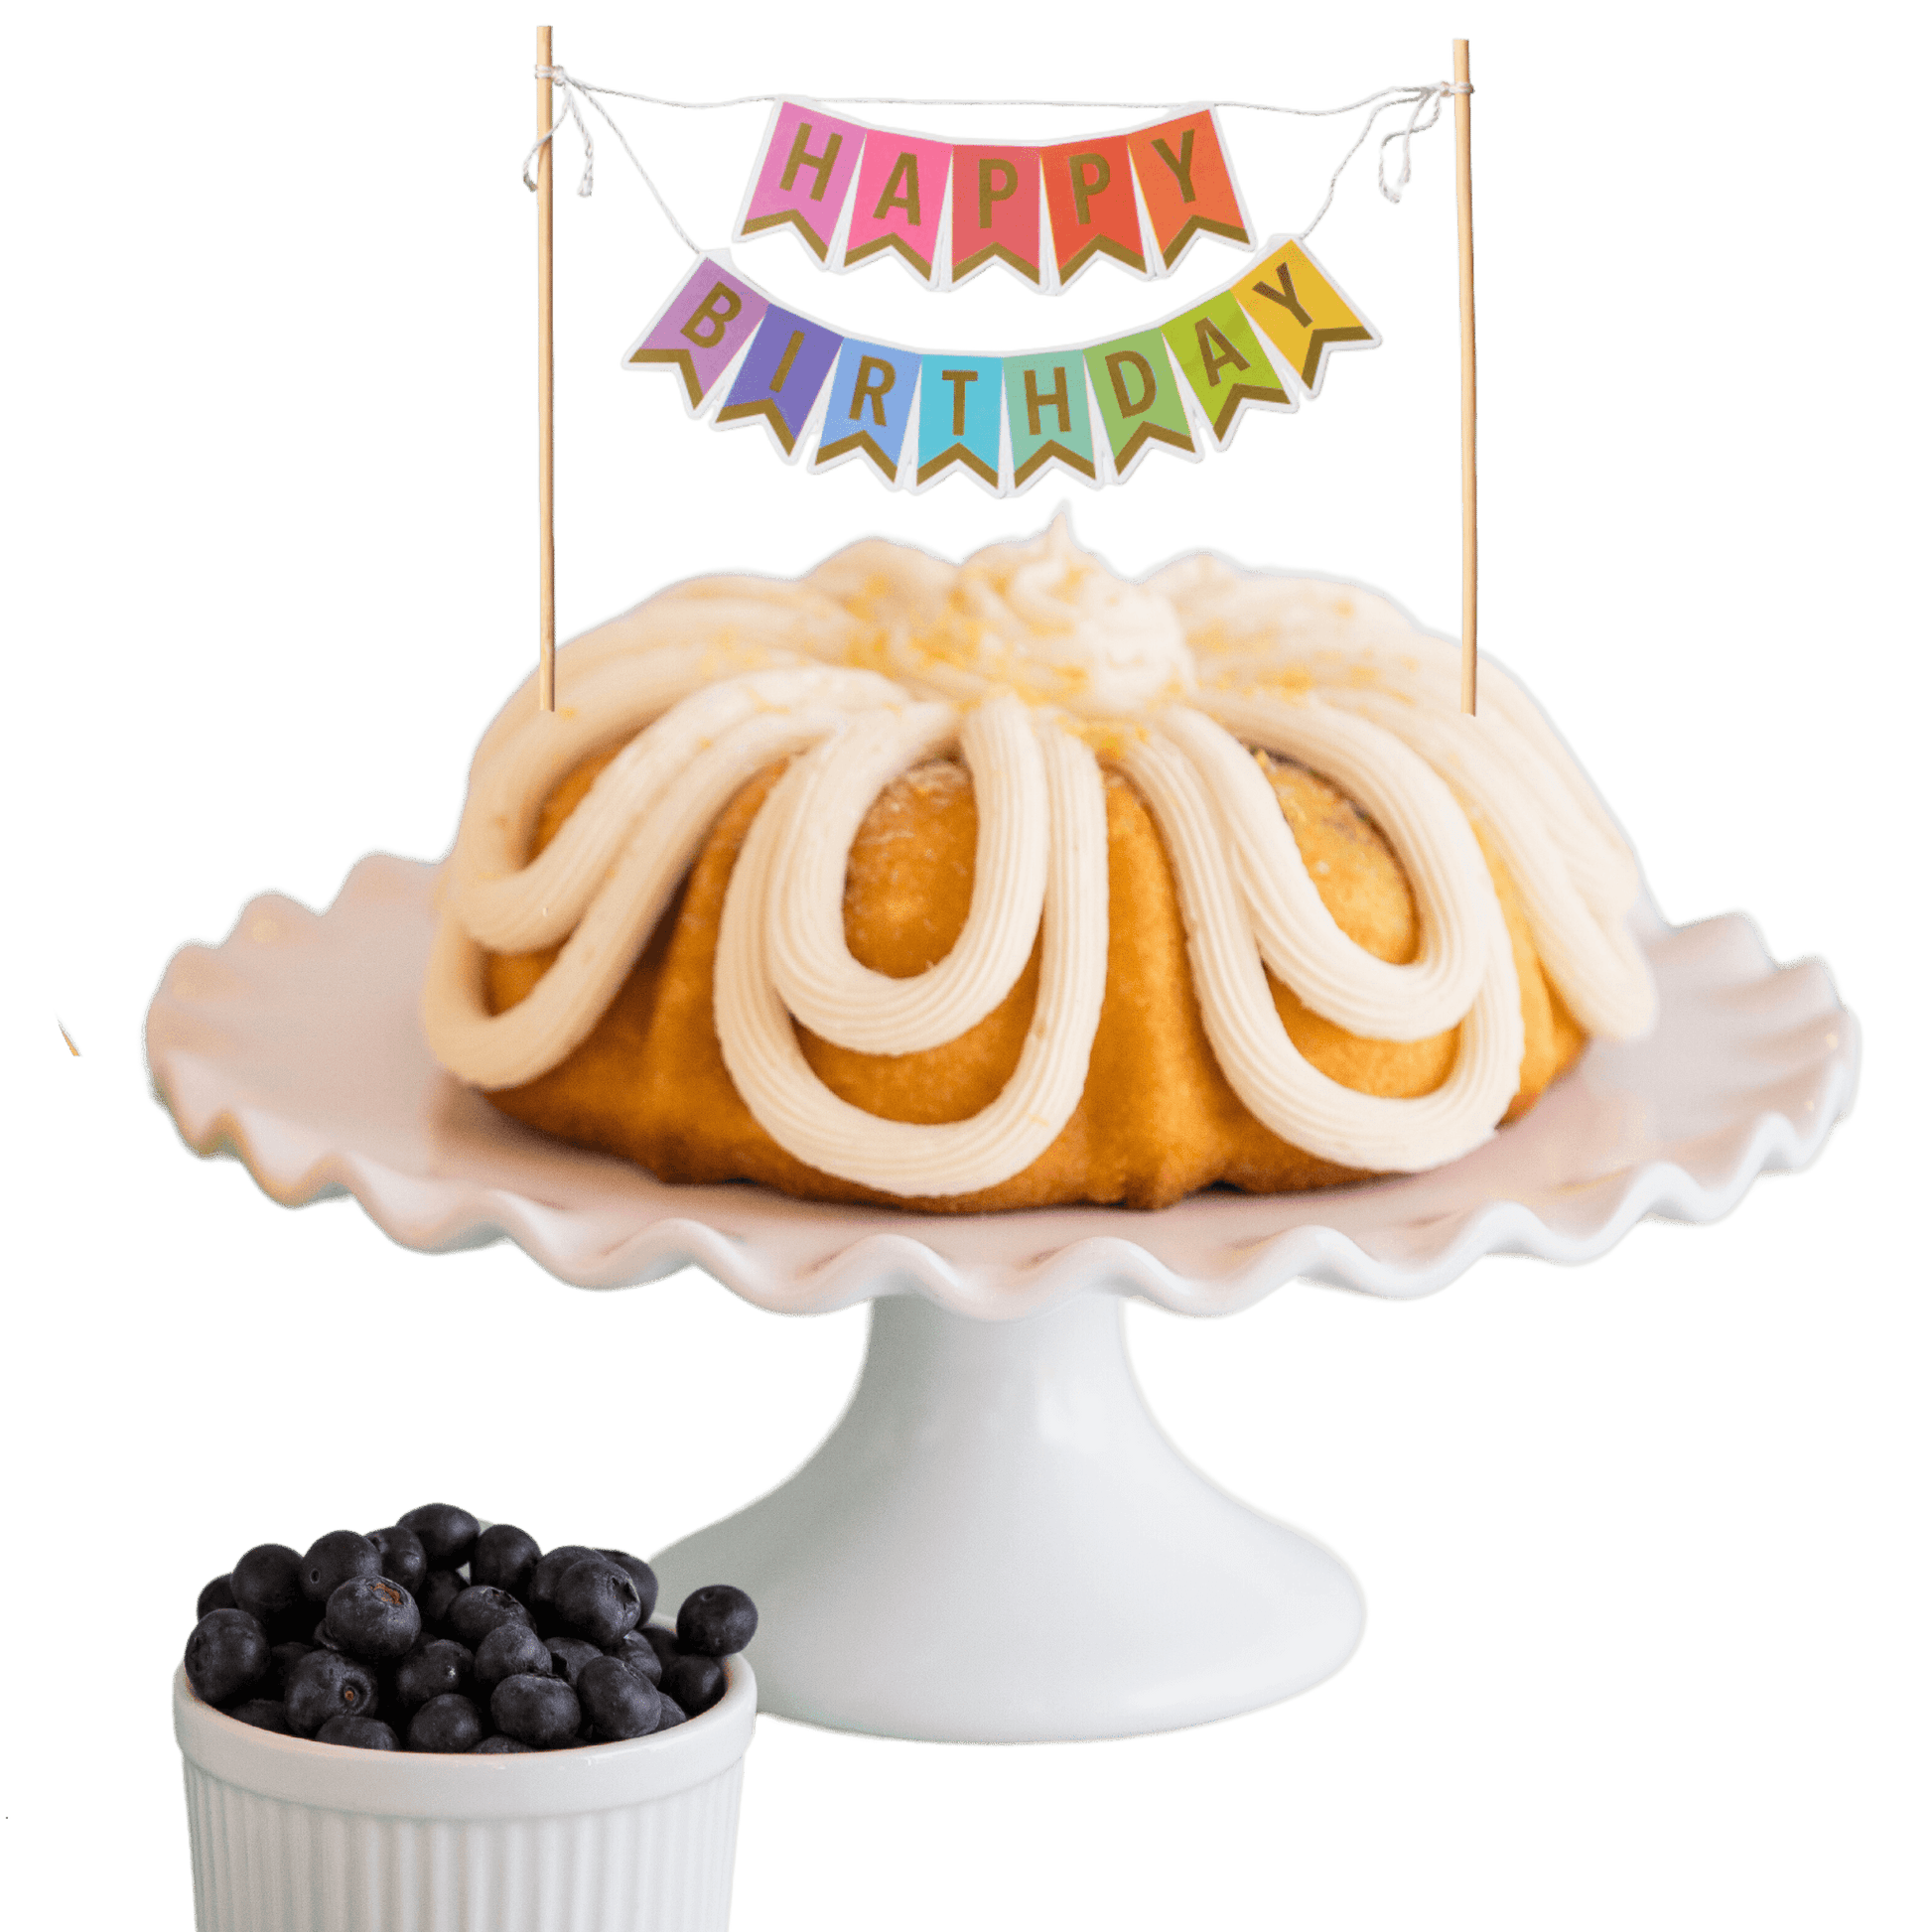 Lemon Blueberry "HAPPY BIRTHDAY" Awning Banner Bundt Cake - Bundt Cakes